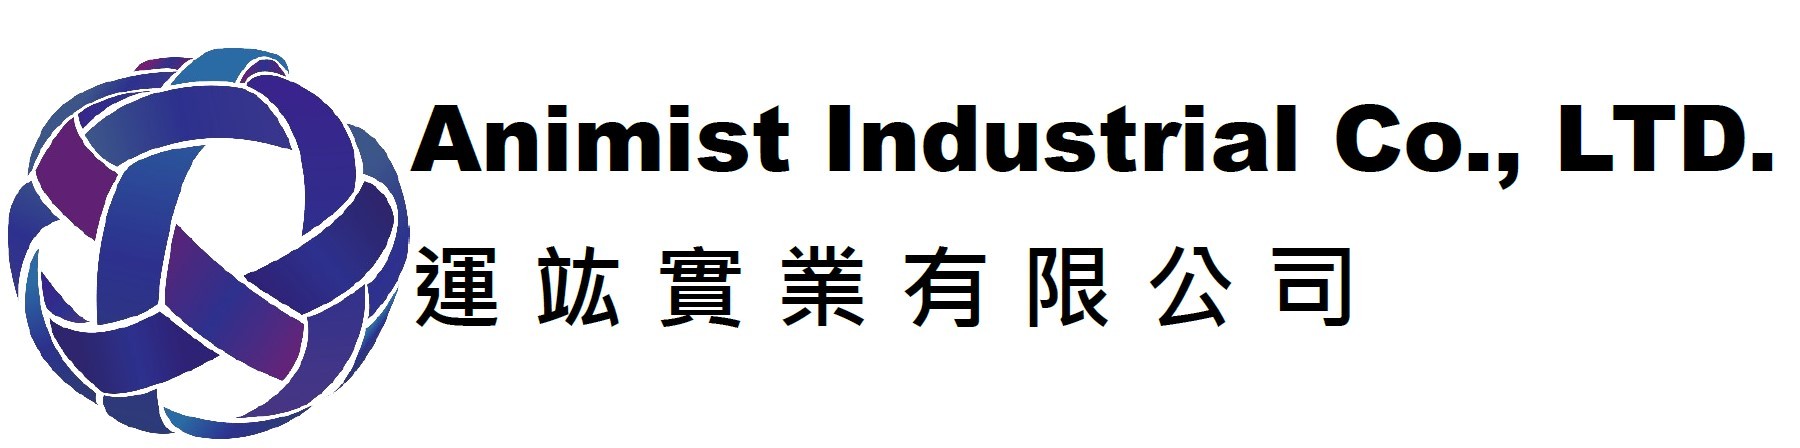 Animist Industrial Co., LTD.